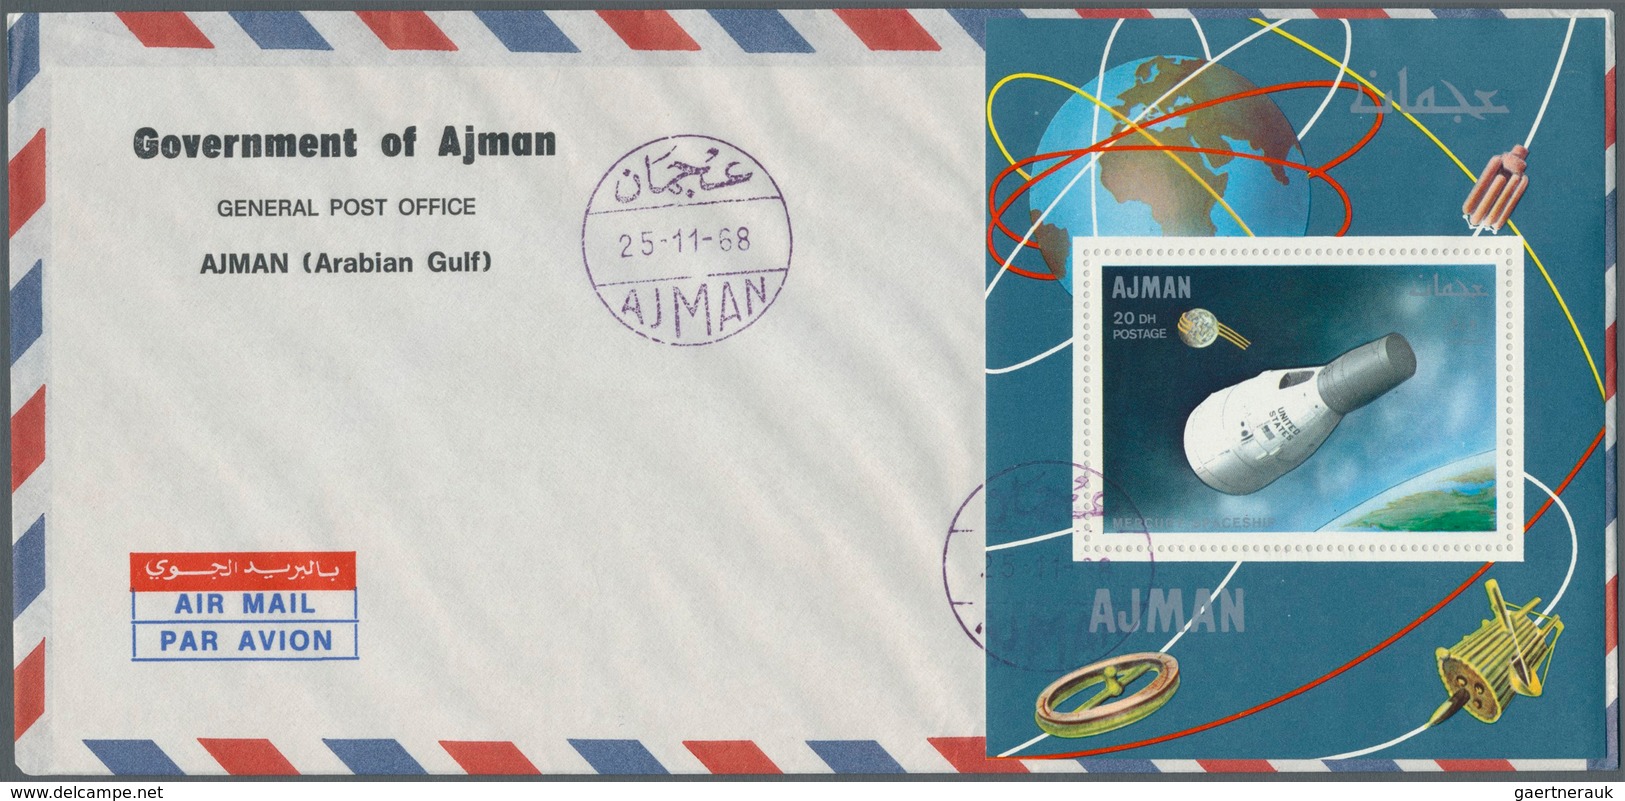 Thematik: Raumfahrt / astronautics: 1968, Apollo 7, 5dh. to 15r., complete set each as de luxe sheet